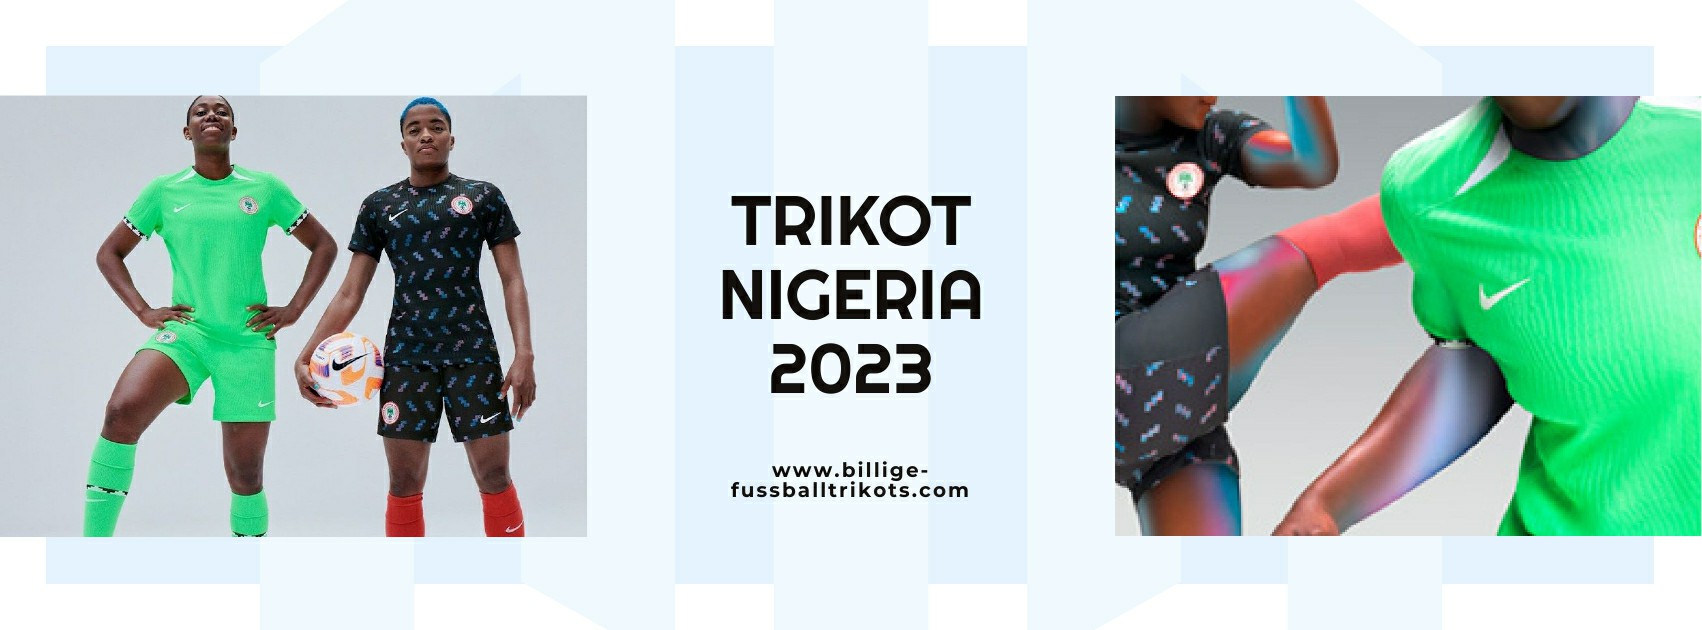 Nigeria Trikot 2023-2024